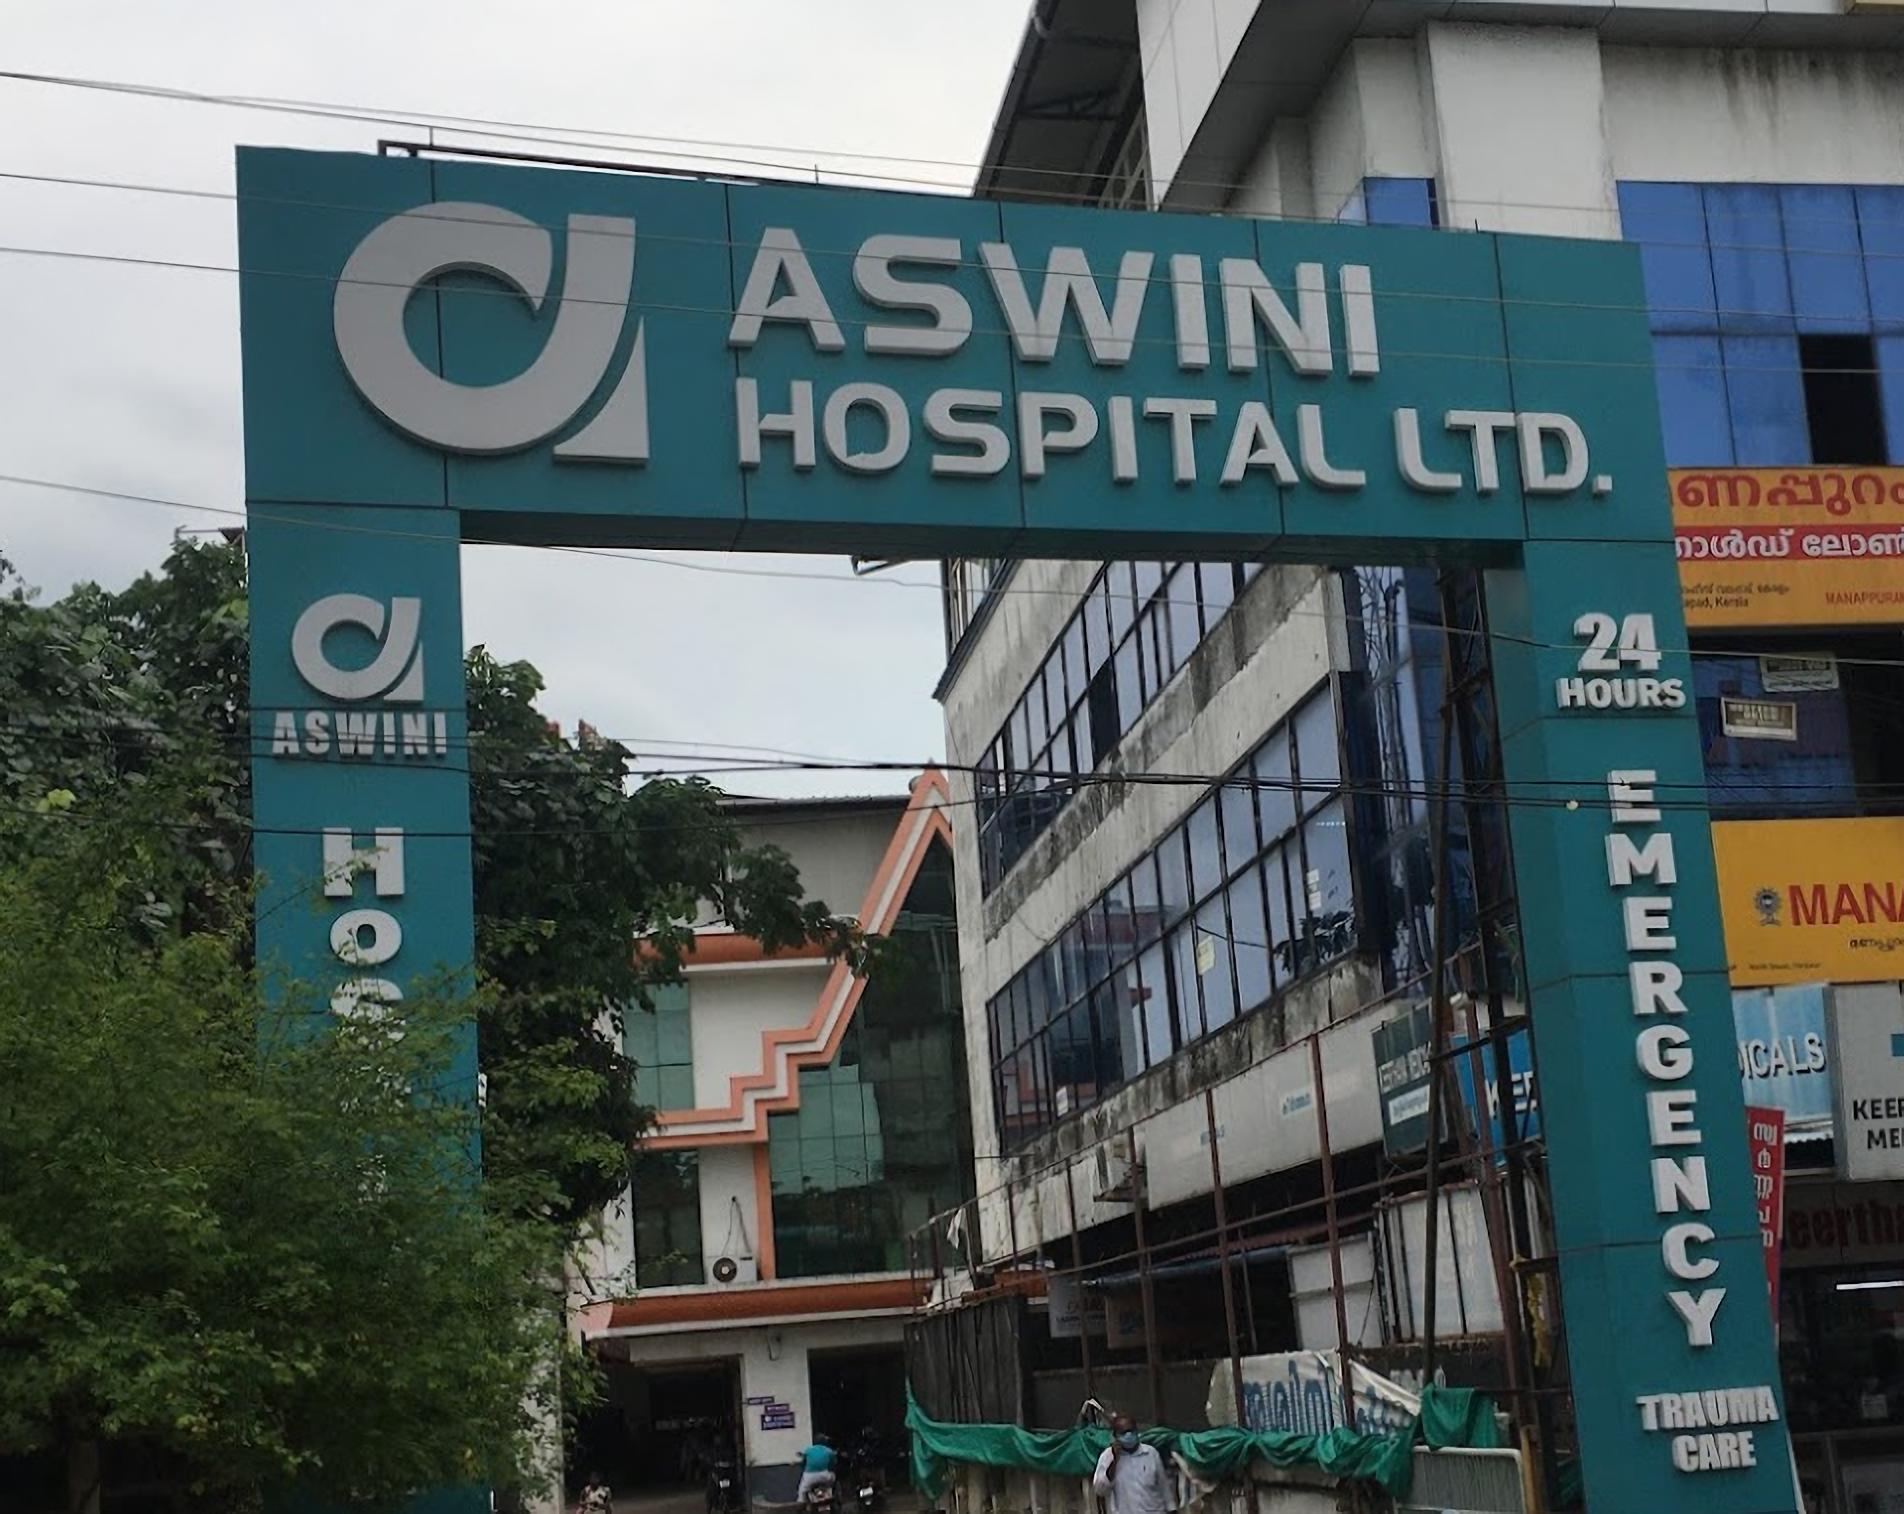 Aswini Hospital Ltd.